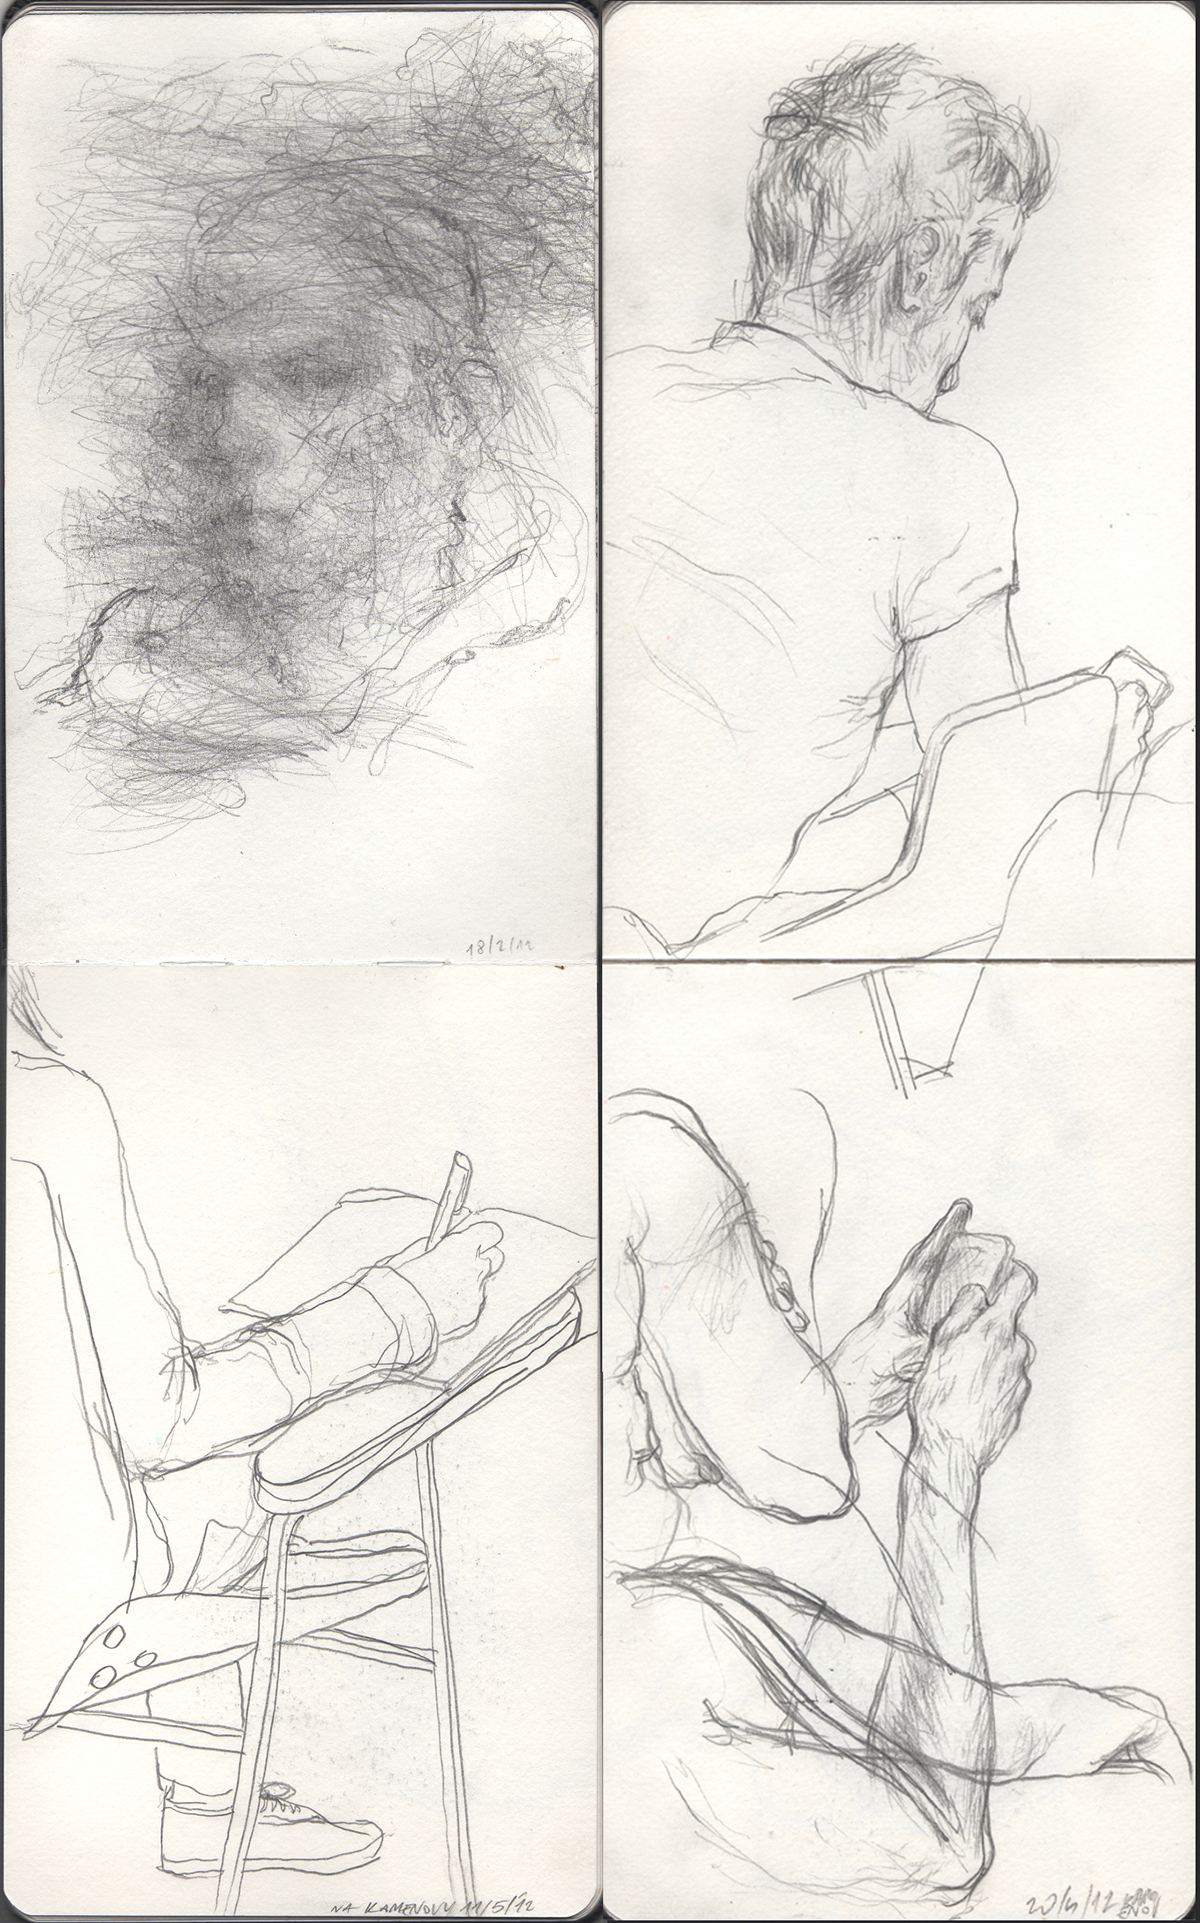 moleskine sketchbook sketch self portrait self-portrait figure pencil ballpoint sketching graphite